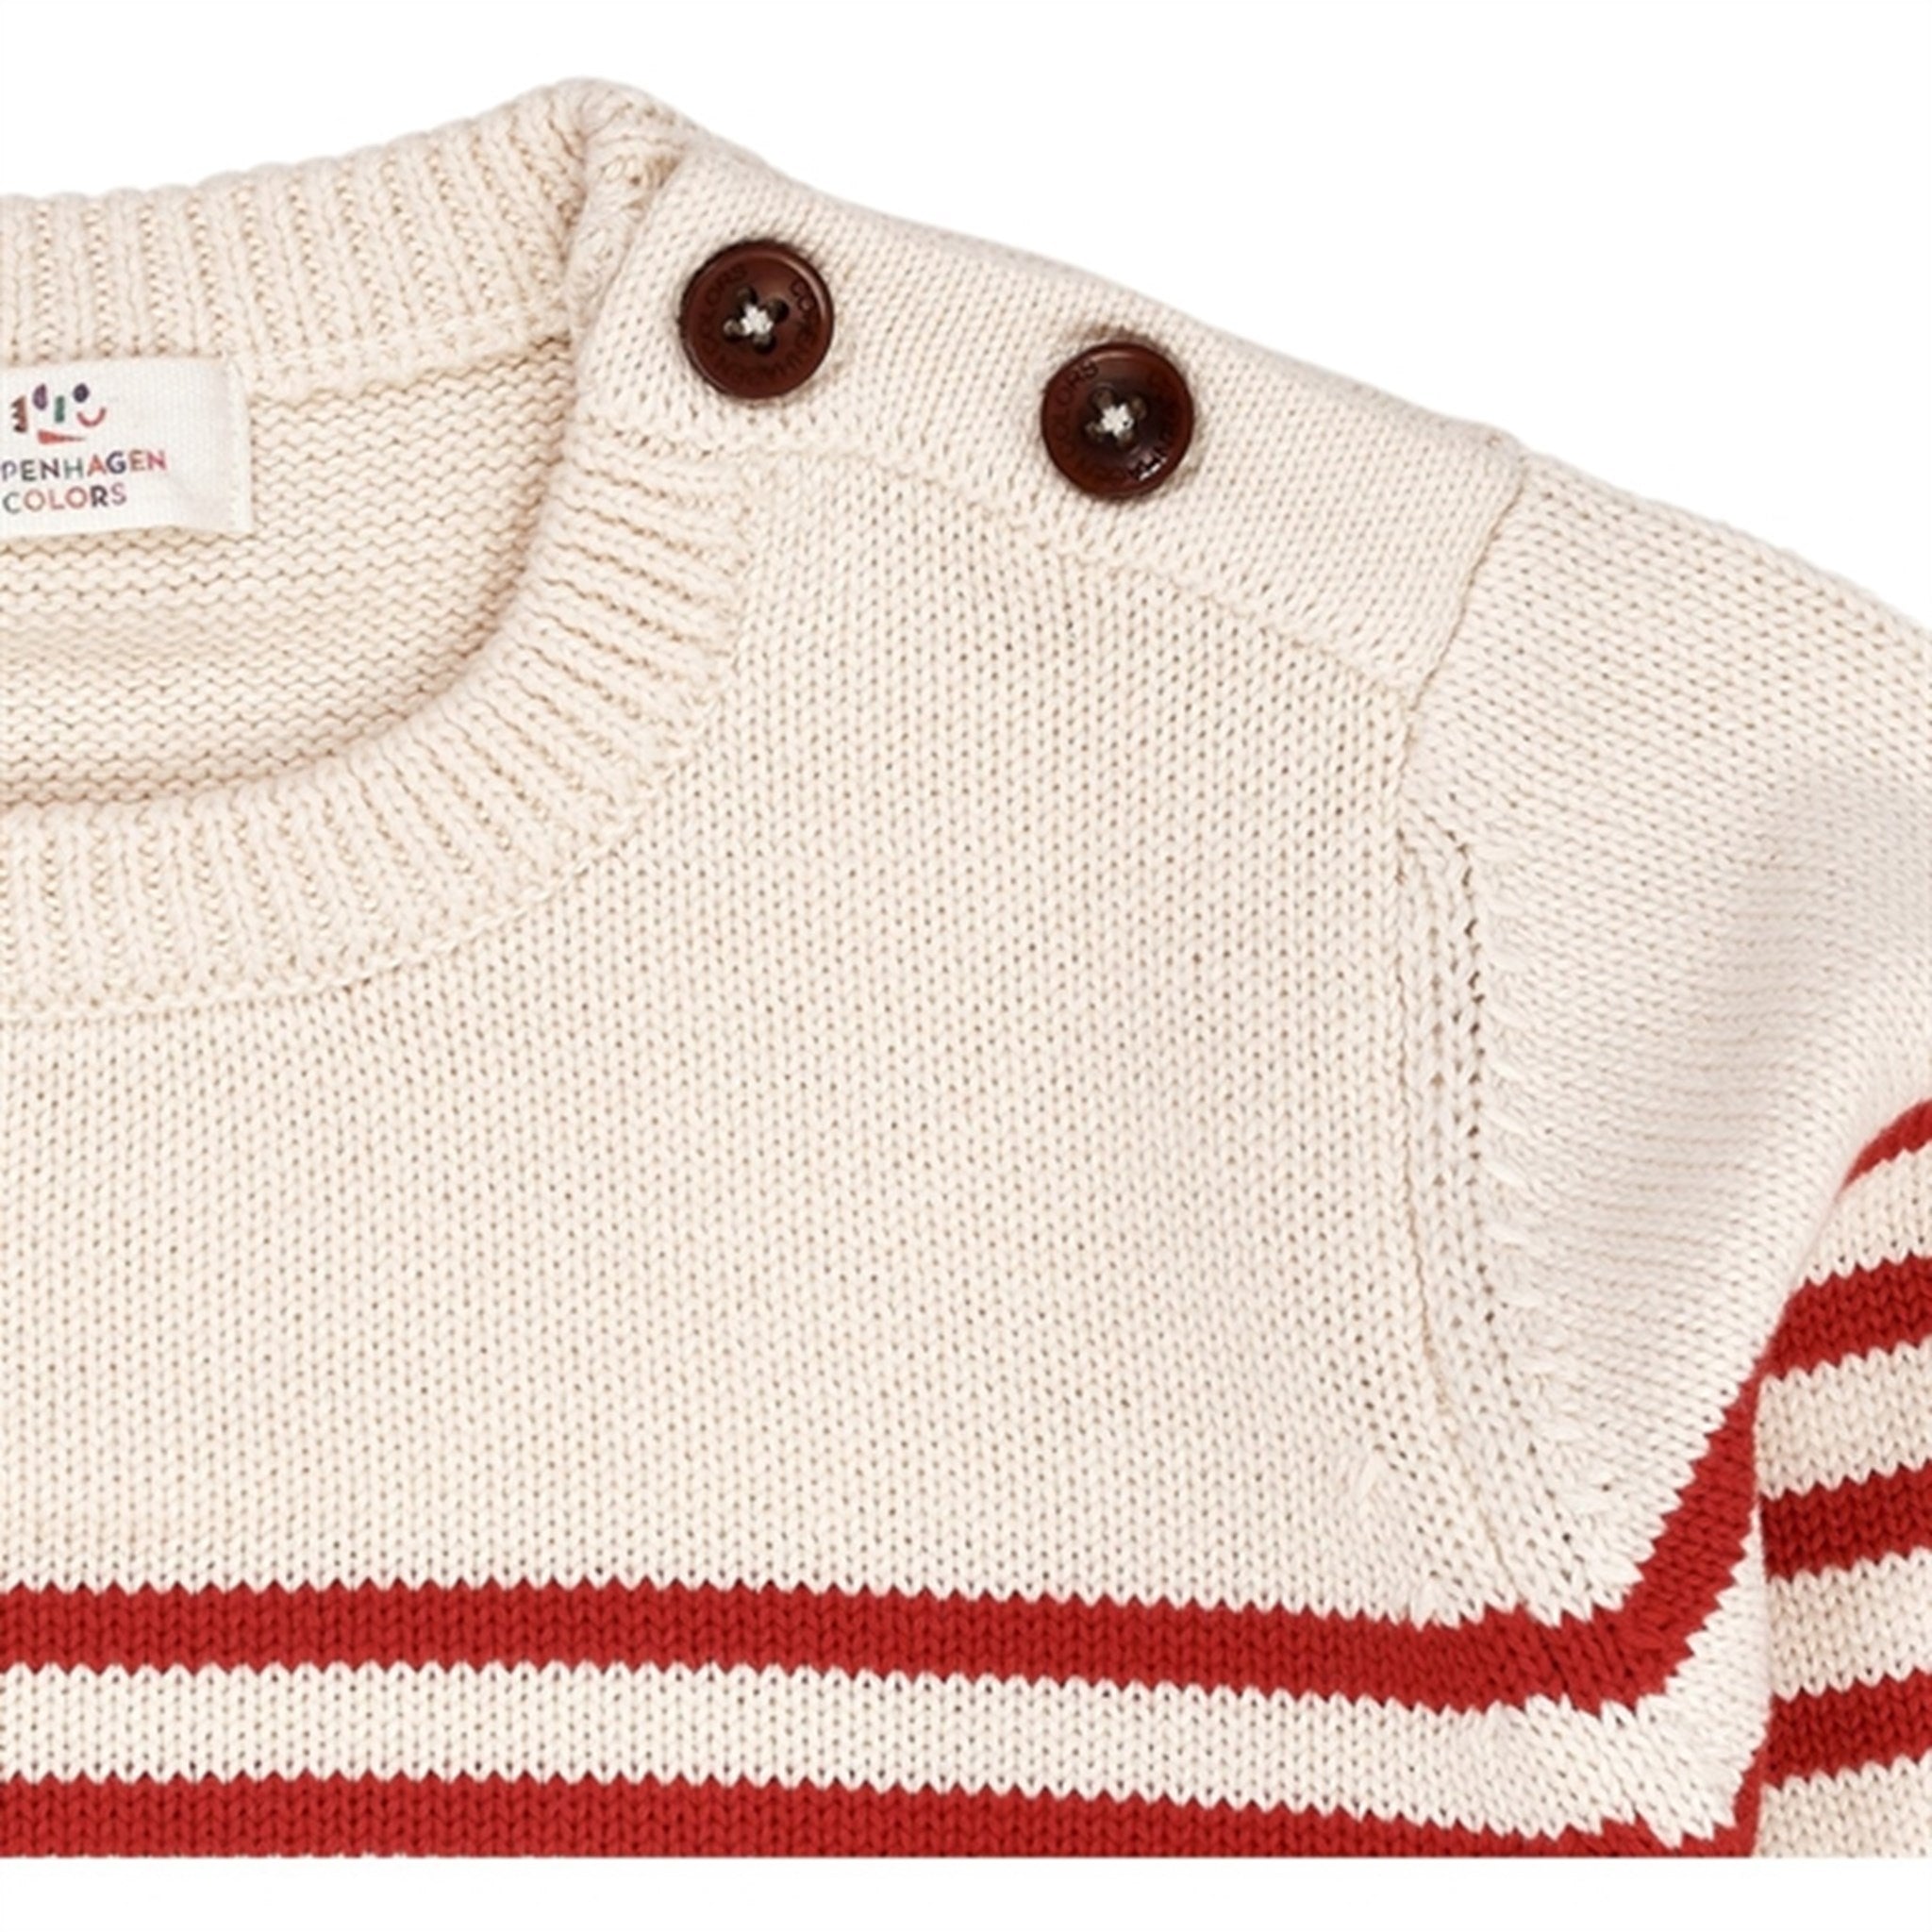 Copenhagen Colors Cream/Red Combi Stickat Sailor Sweater Stripe 7